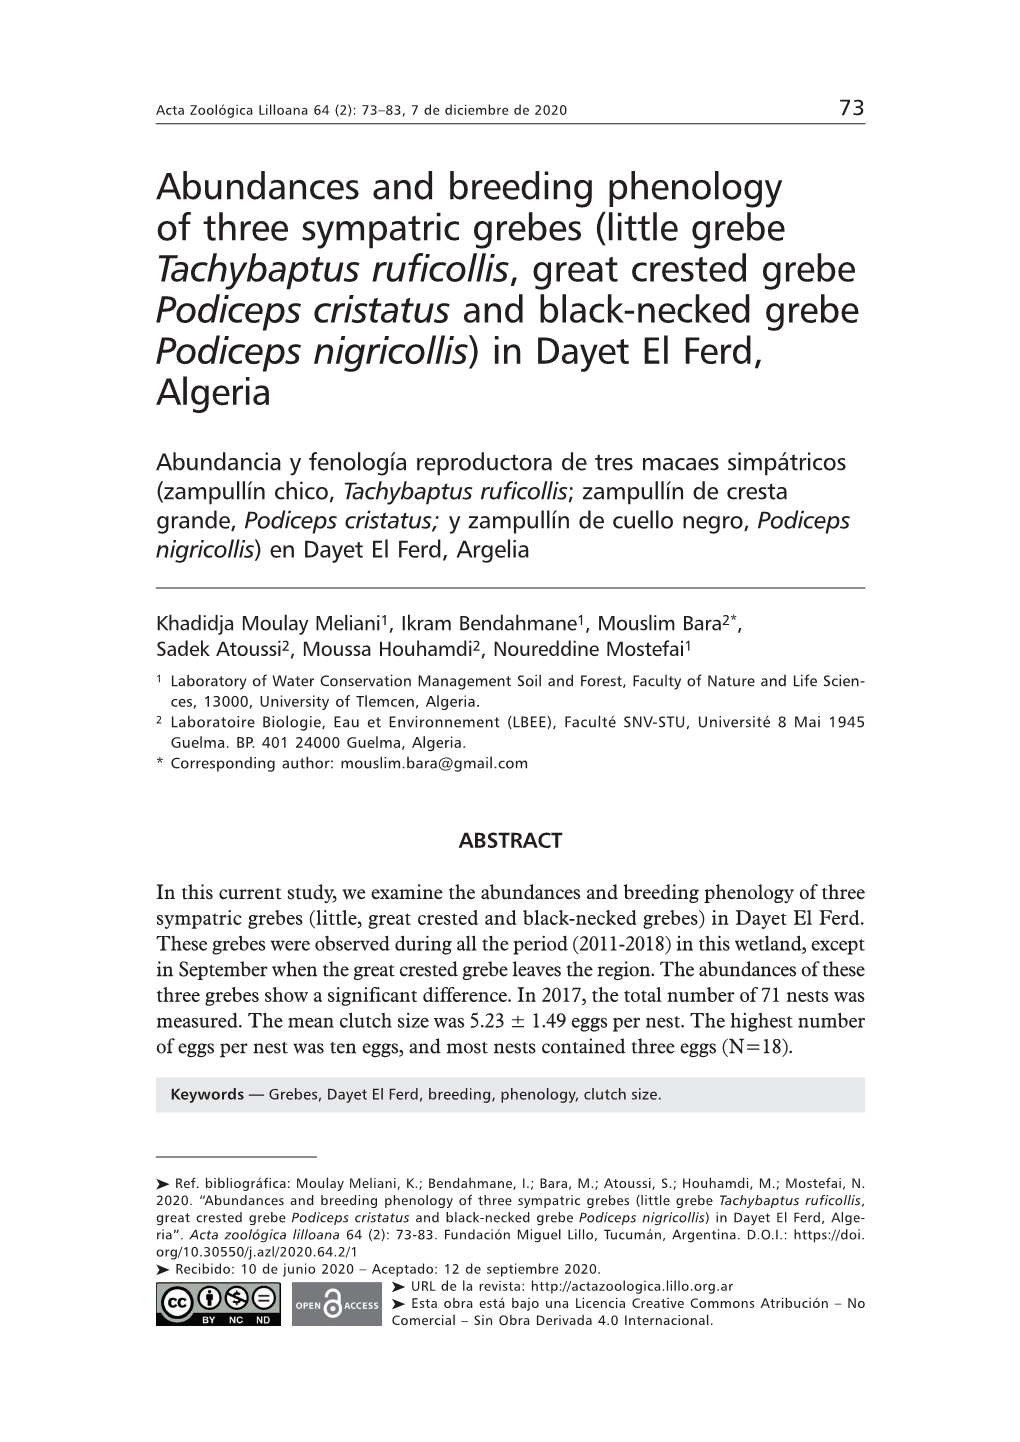 Little Grebe Tachybaptus Ruficollis, Great Crested Grebe Podiceps Cristatus and Black-Necked Grebe Podiceps Nigricollis) in Dayet El Ferd, Algeria